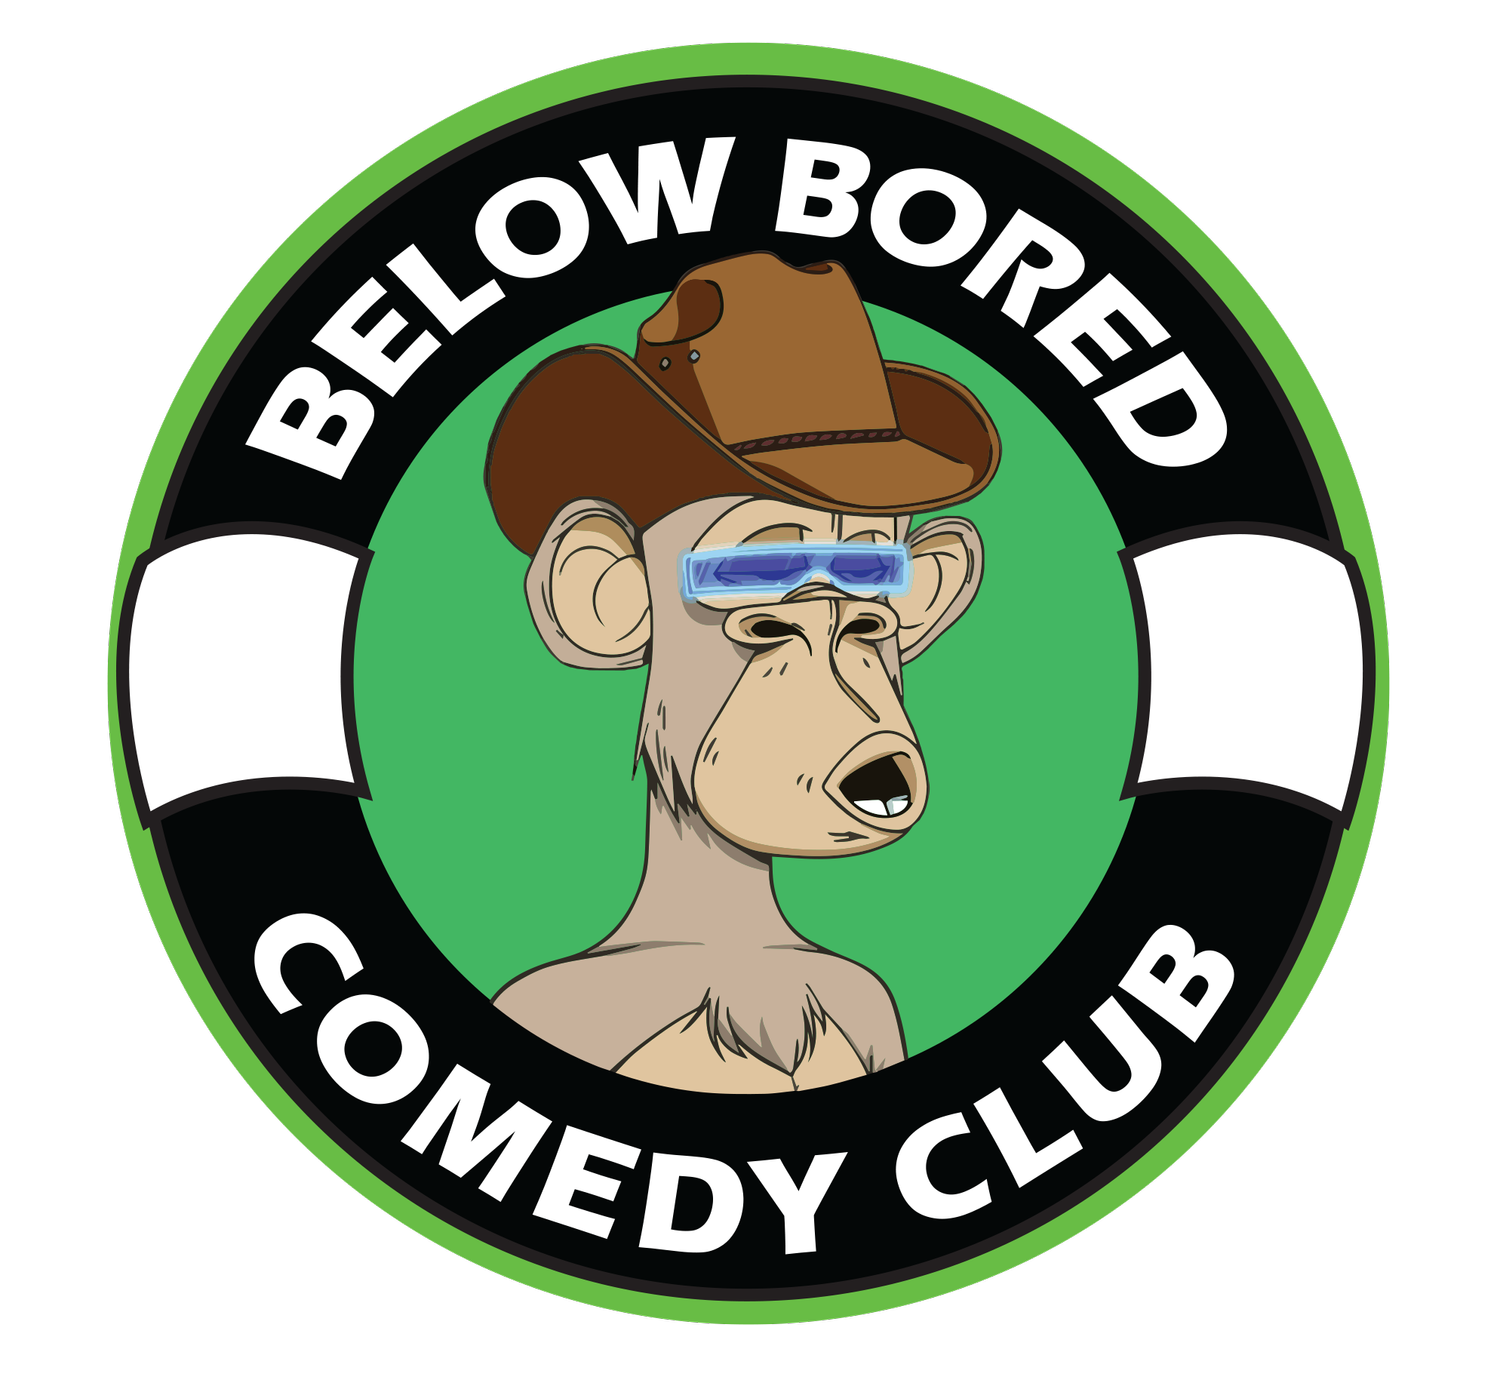 Below Bored Comedy Club